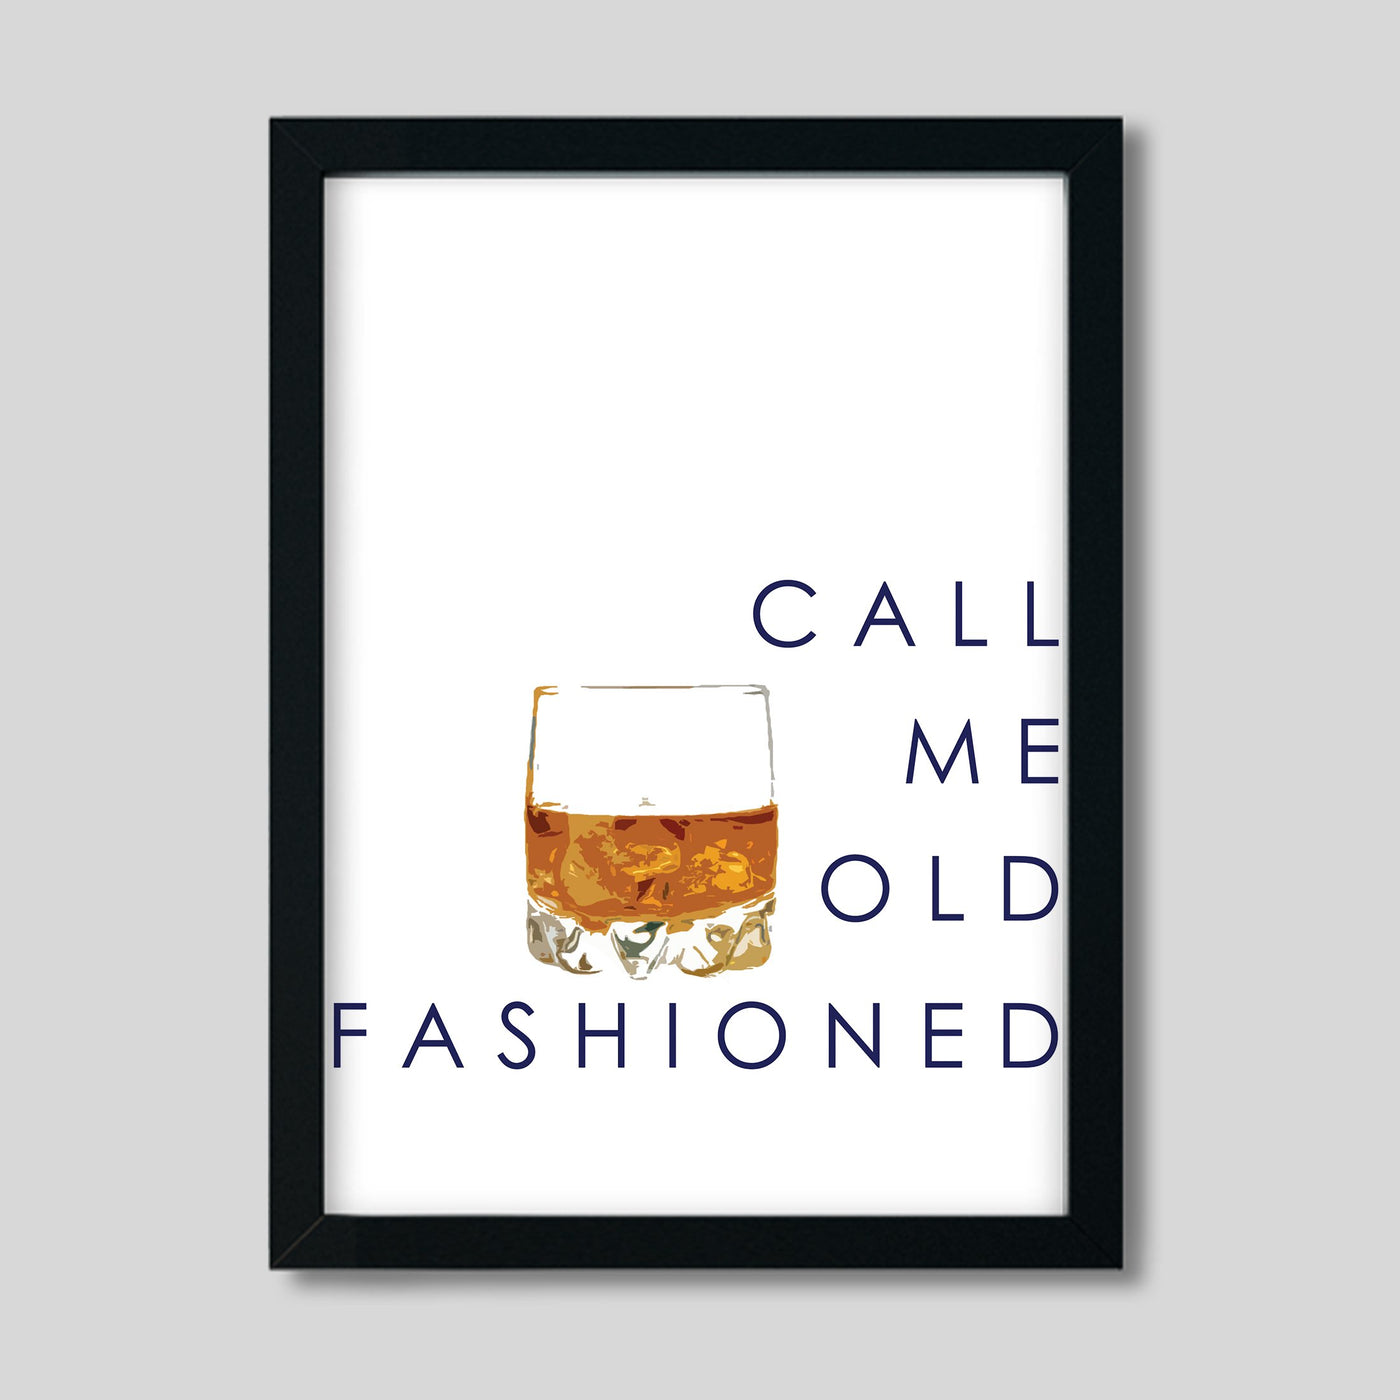 Call Me Old Fashioned Print Gallery Print 16x20 / Black Frame Katie Kime